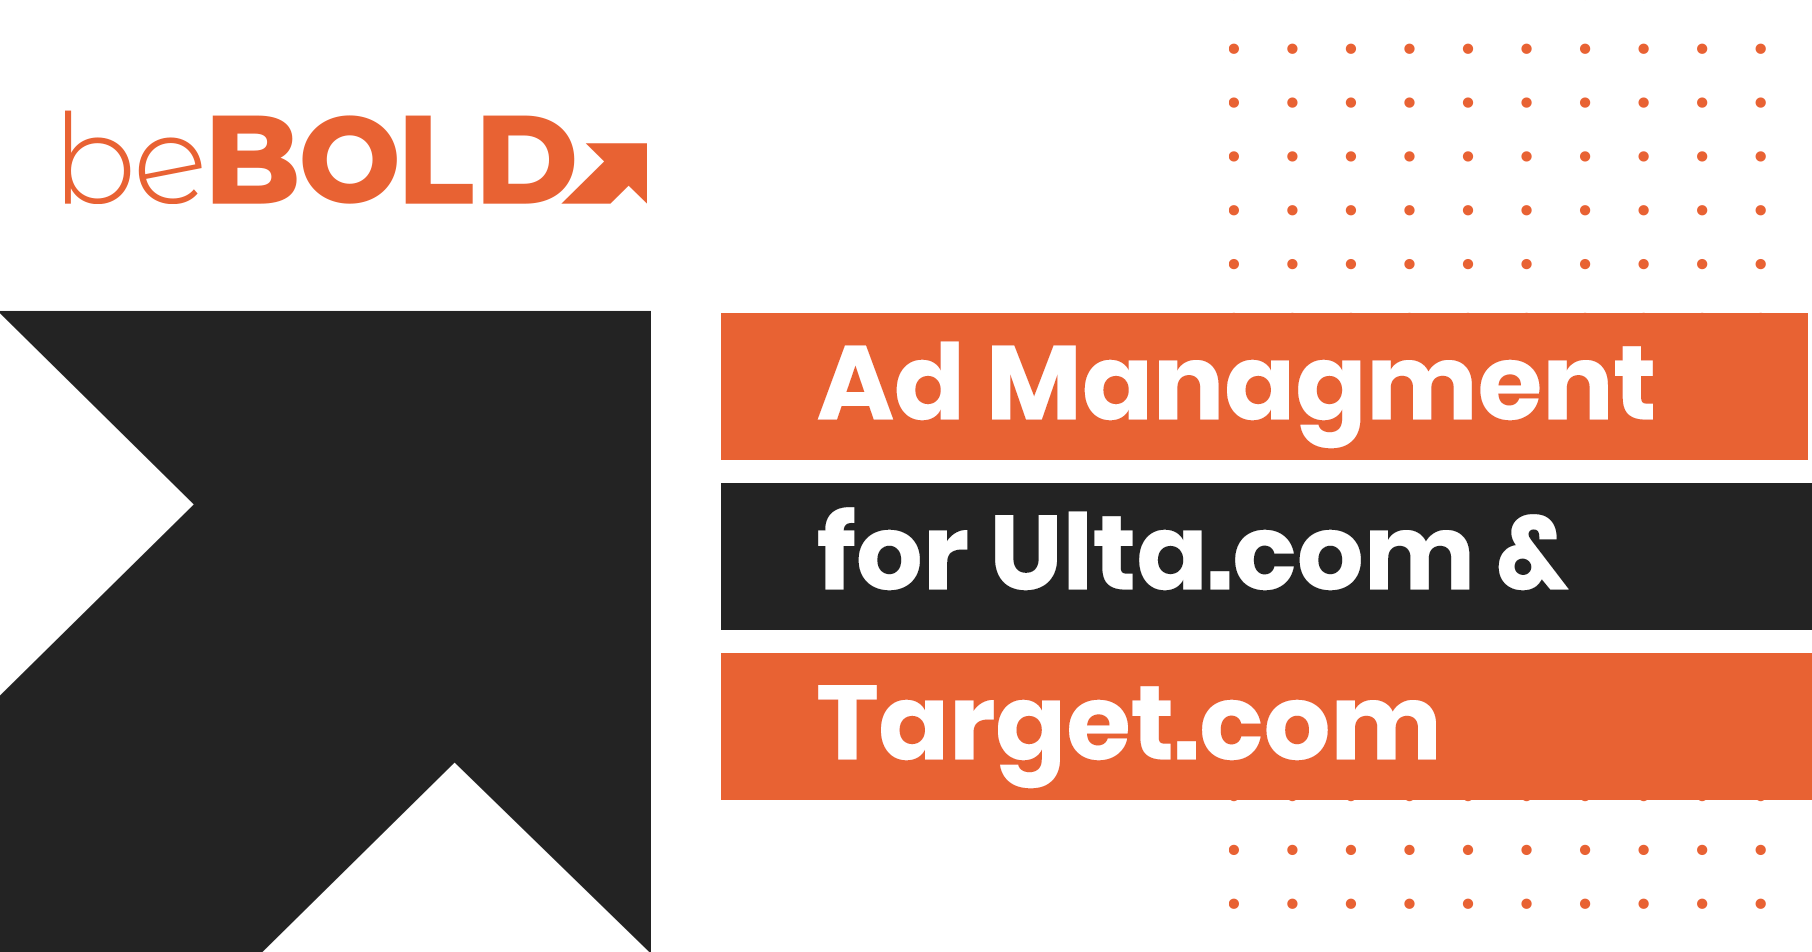 ulta and target beauty advertising management - bebold